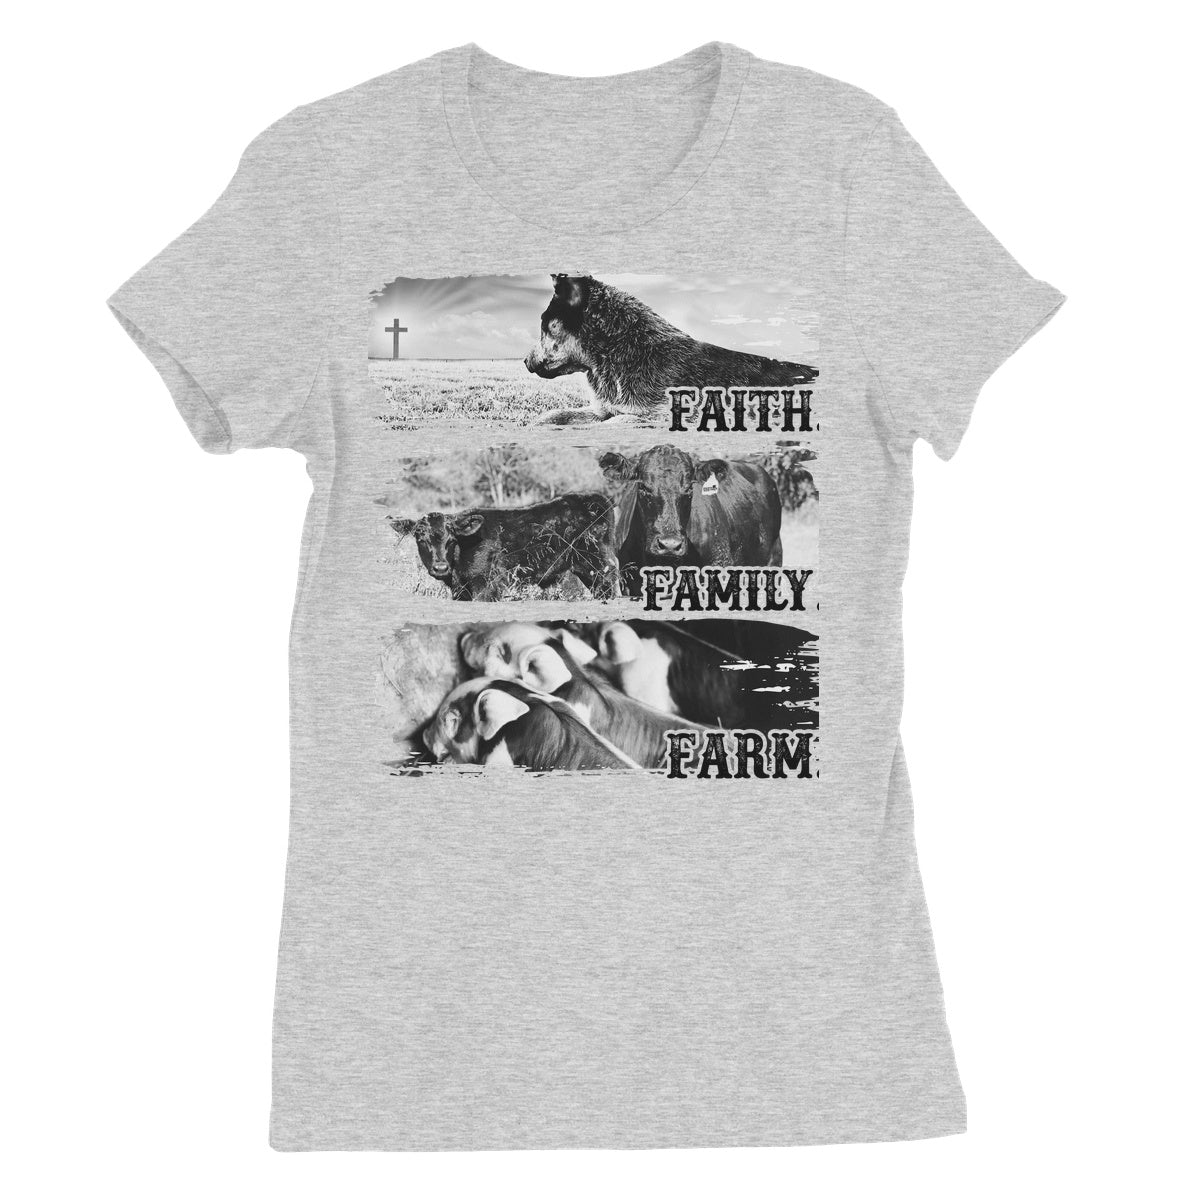 Faith.Family.Farm. Women's Favourite T-Shirt